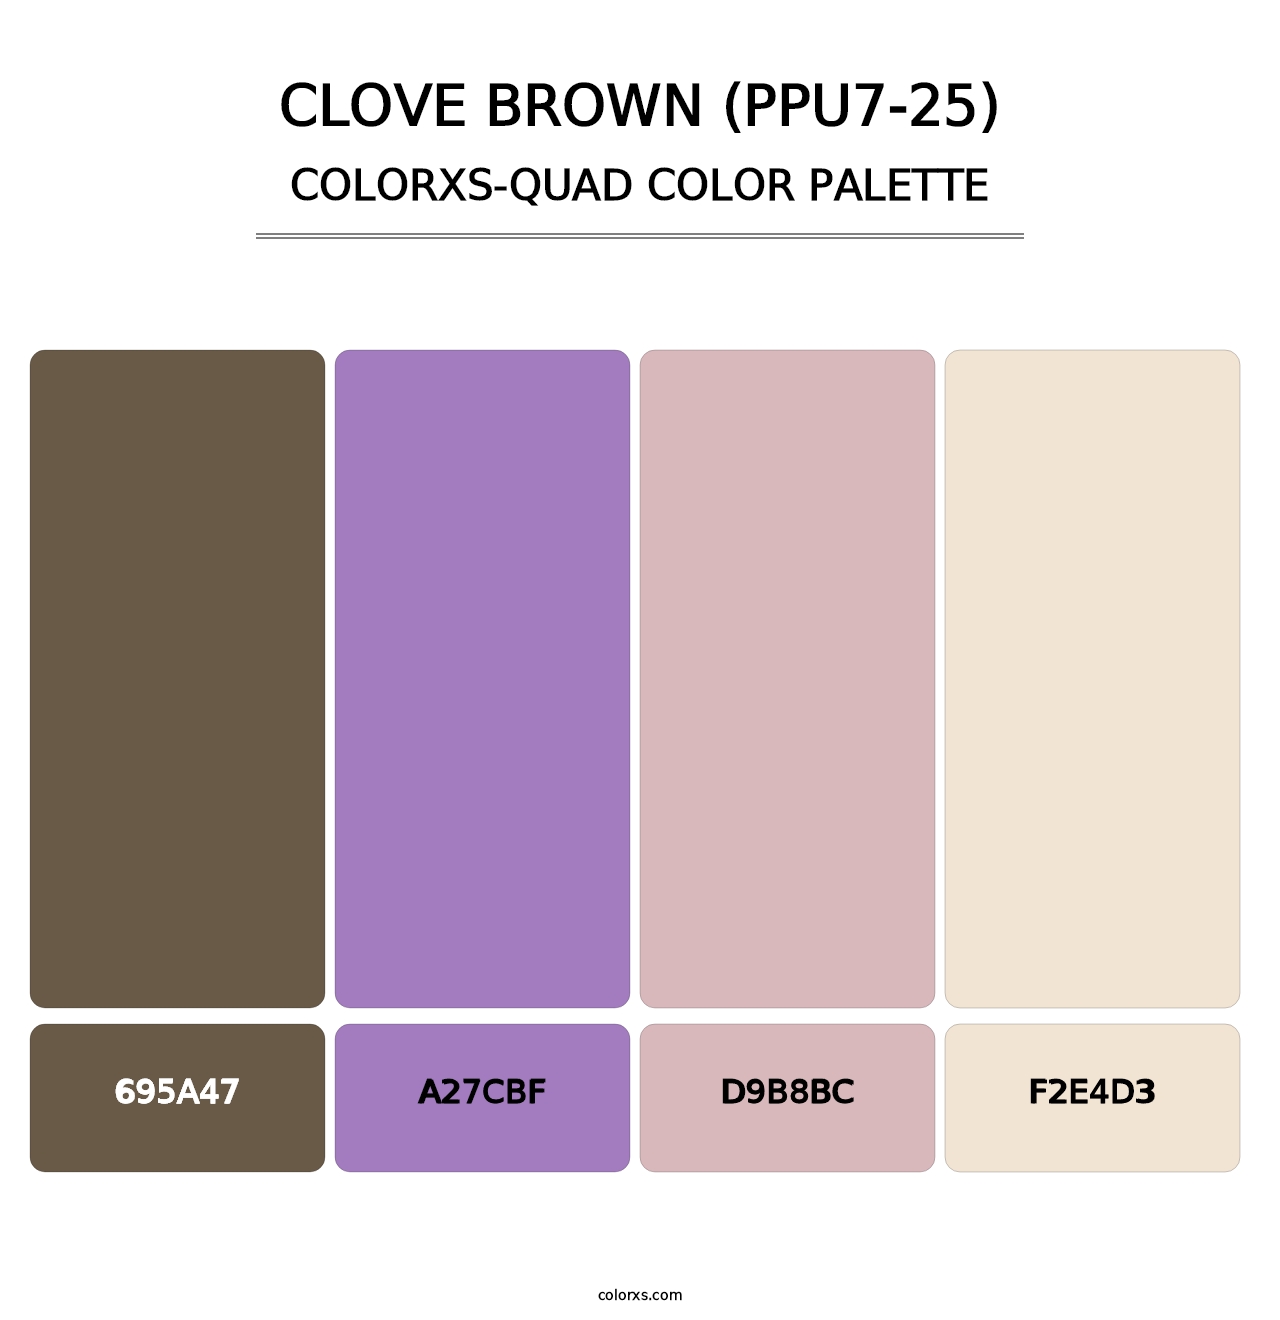 Clove Brown (PPU7-25) - Colorxs Quad Palette